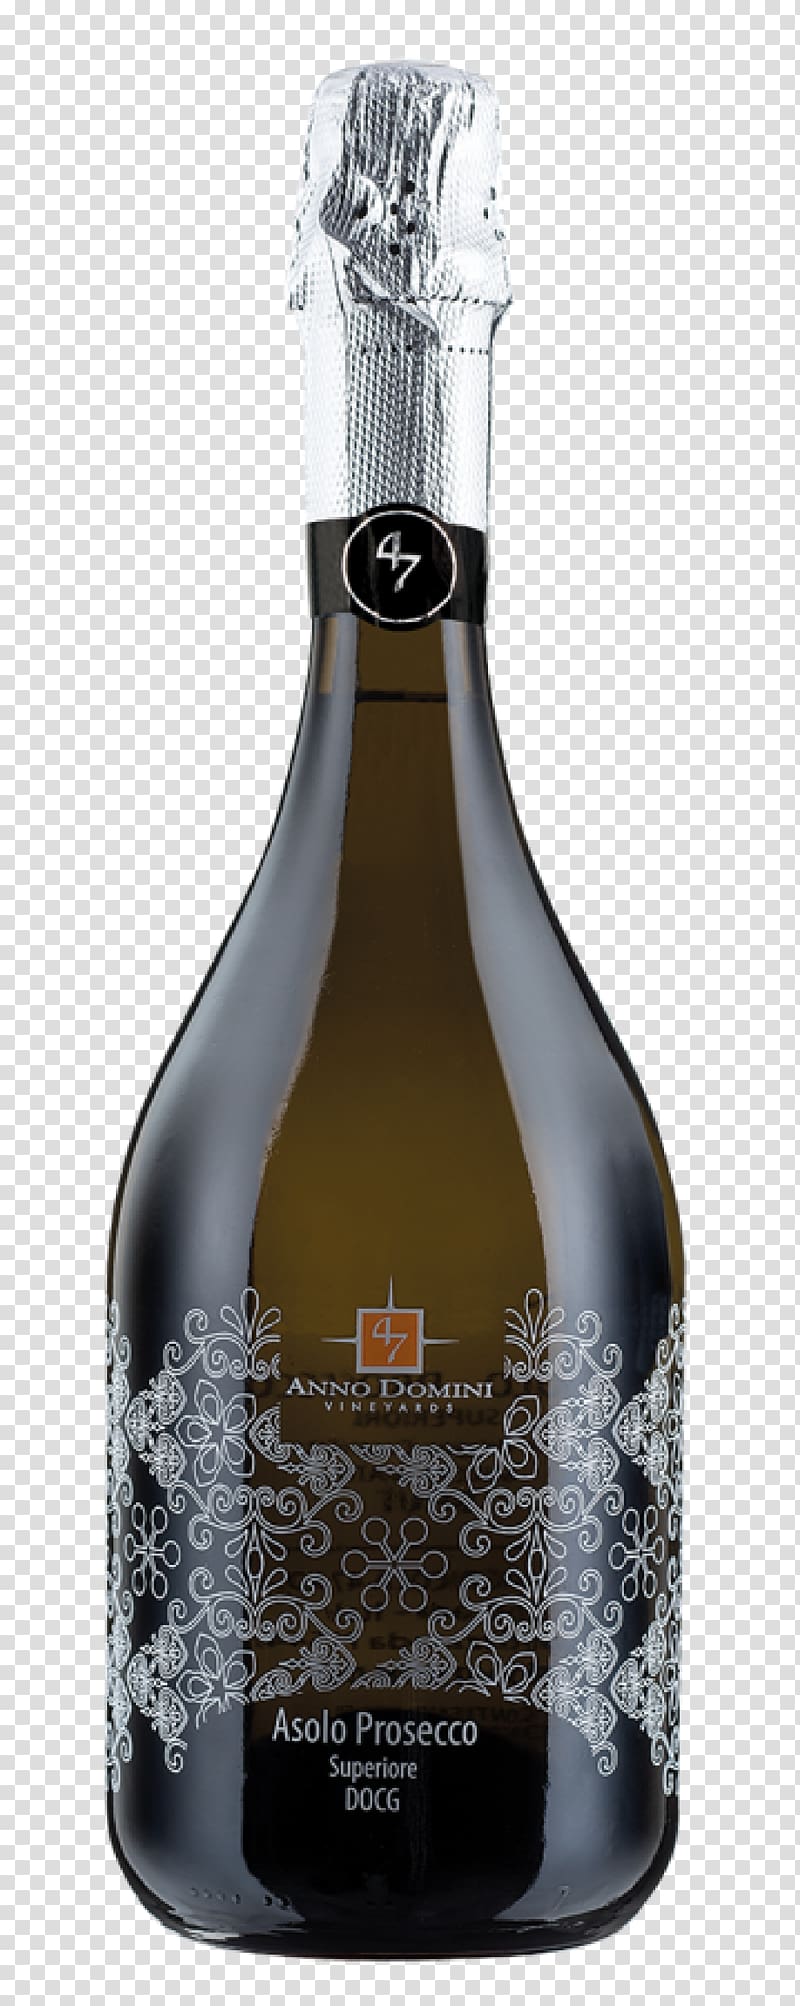 Champagne Prosecco Sparkling wine Glera, champagne transparent background PNG clipart